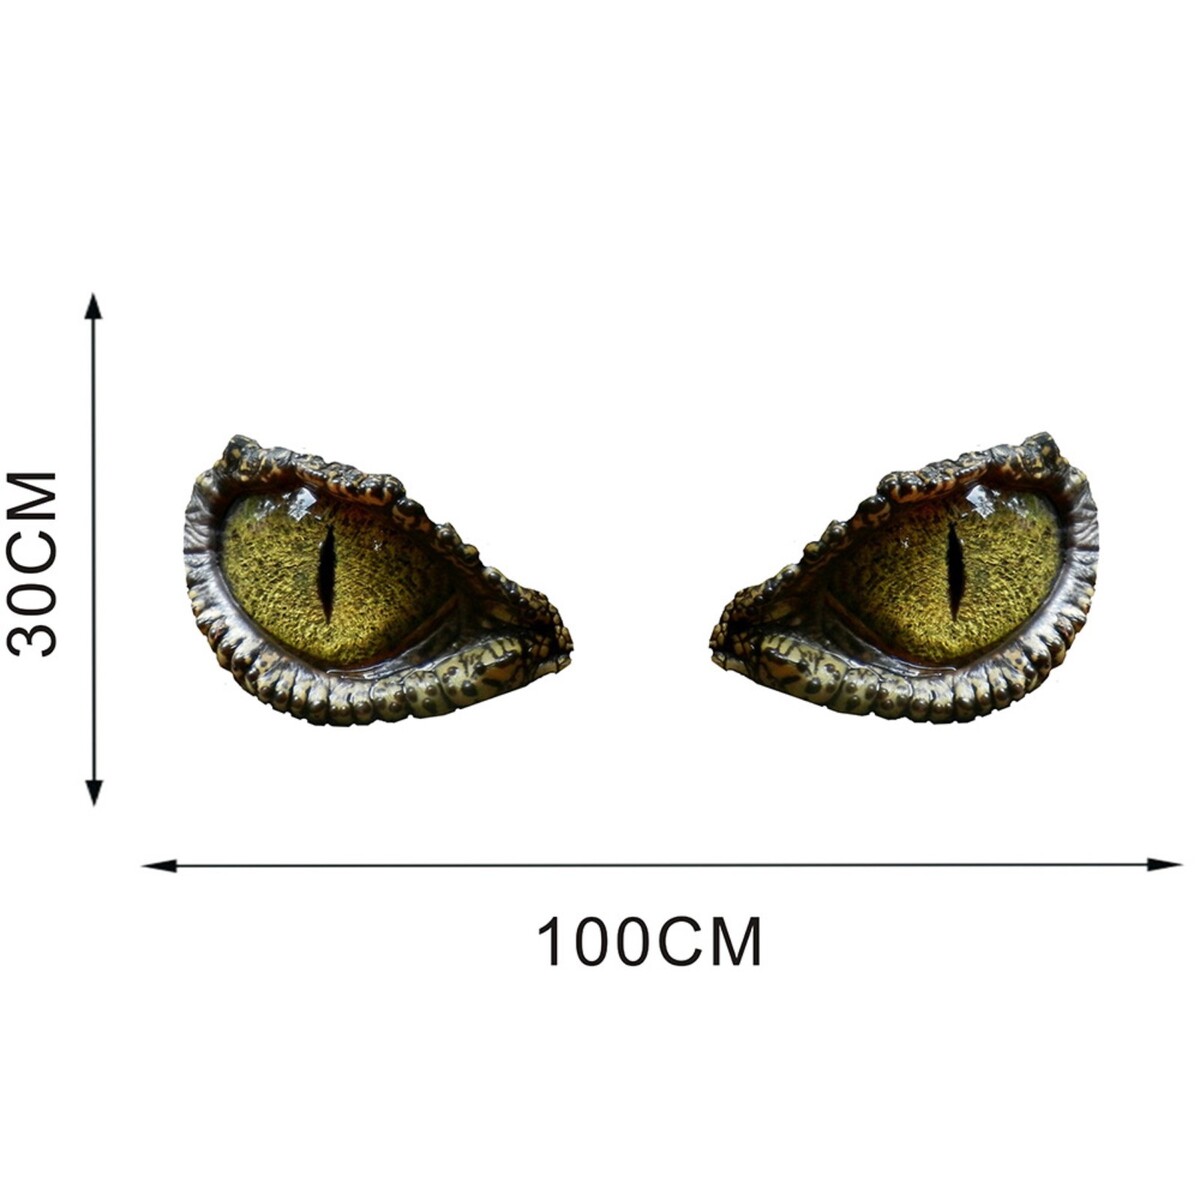 Наклейка 3д интерьерная взгляд динозавра 60*40см наклейка для кия longoni fuji modena m 14 мм 45 445 14 2